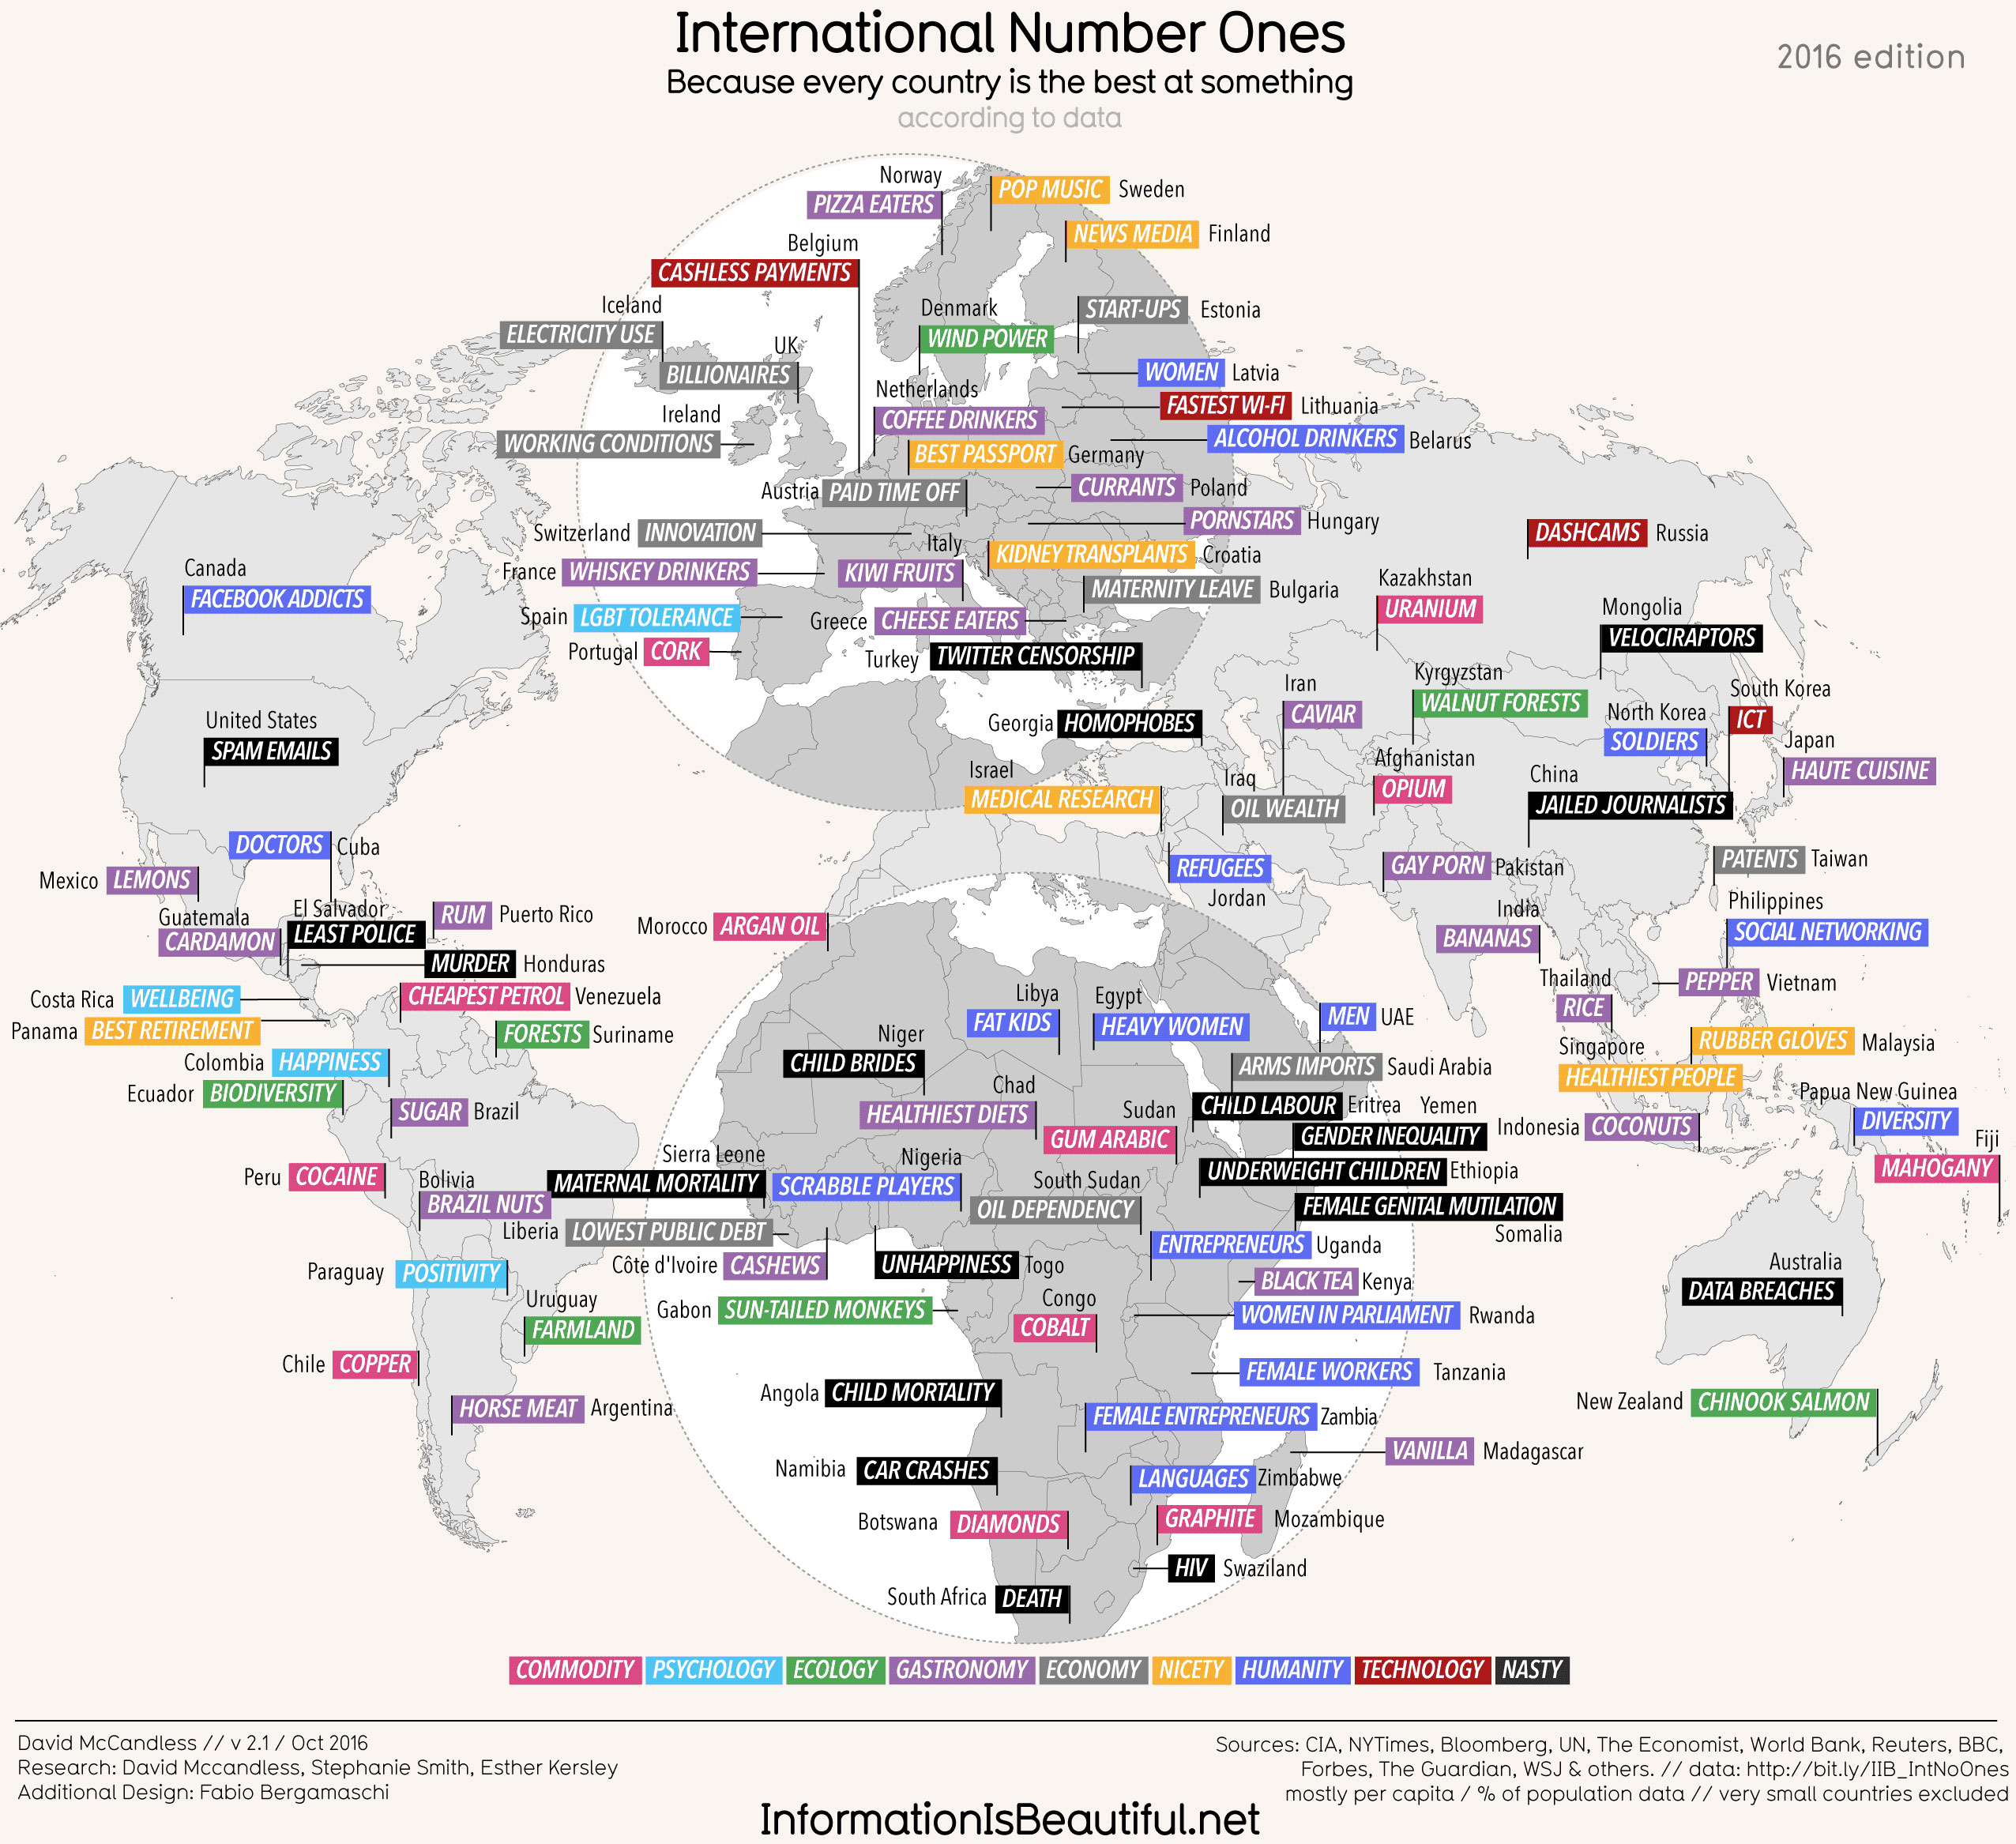 international-number-ones-statistics-world-map-2016-original